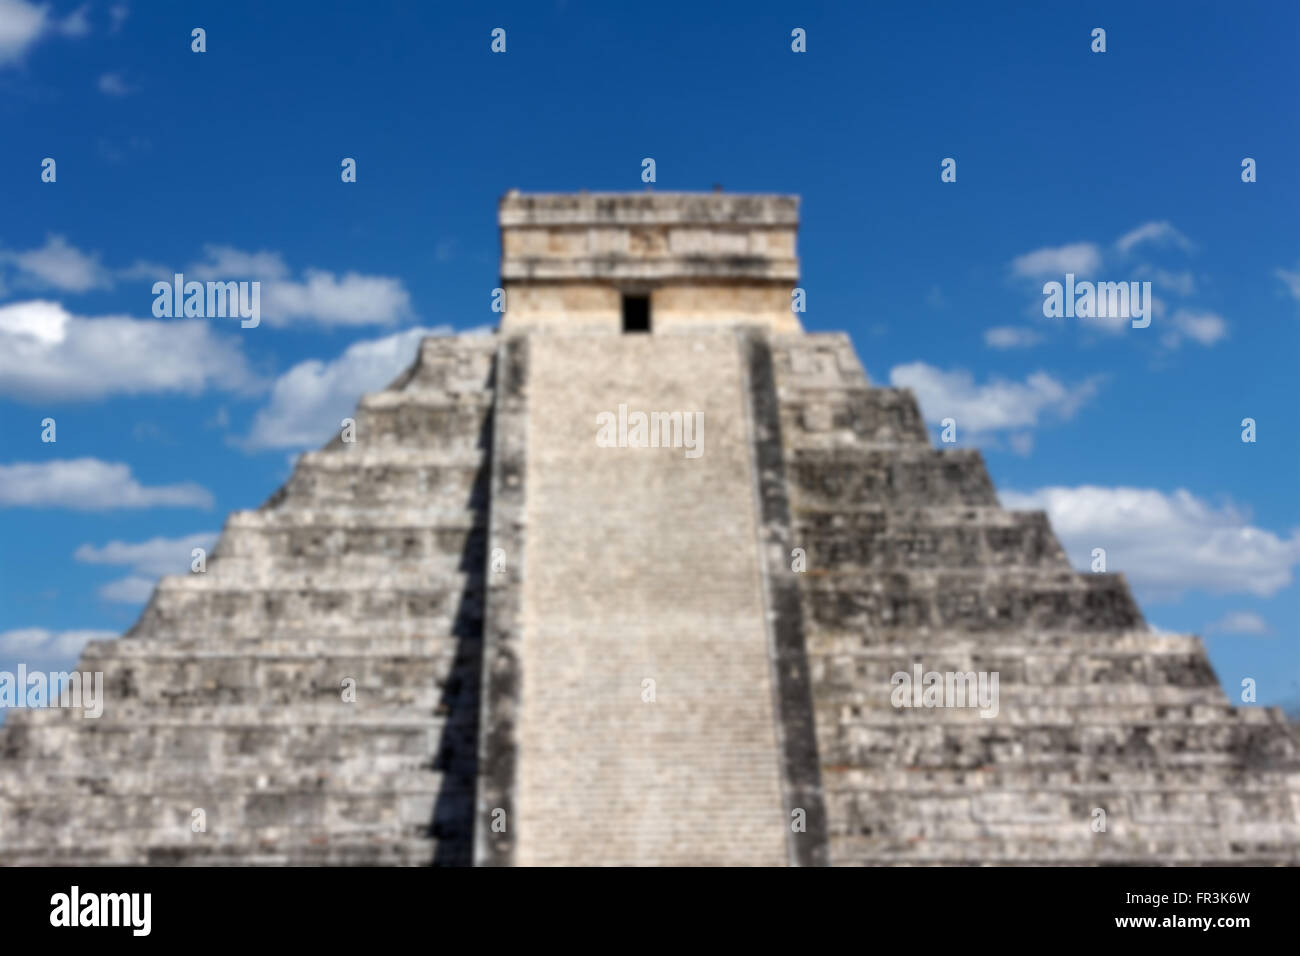 Blurred background of Mayan temple Pyramid at Chichen Itza, Yucatan, Mexico. Stock Photo